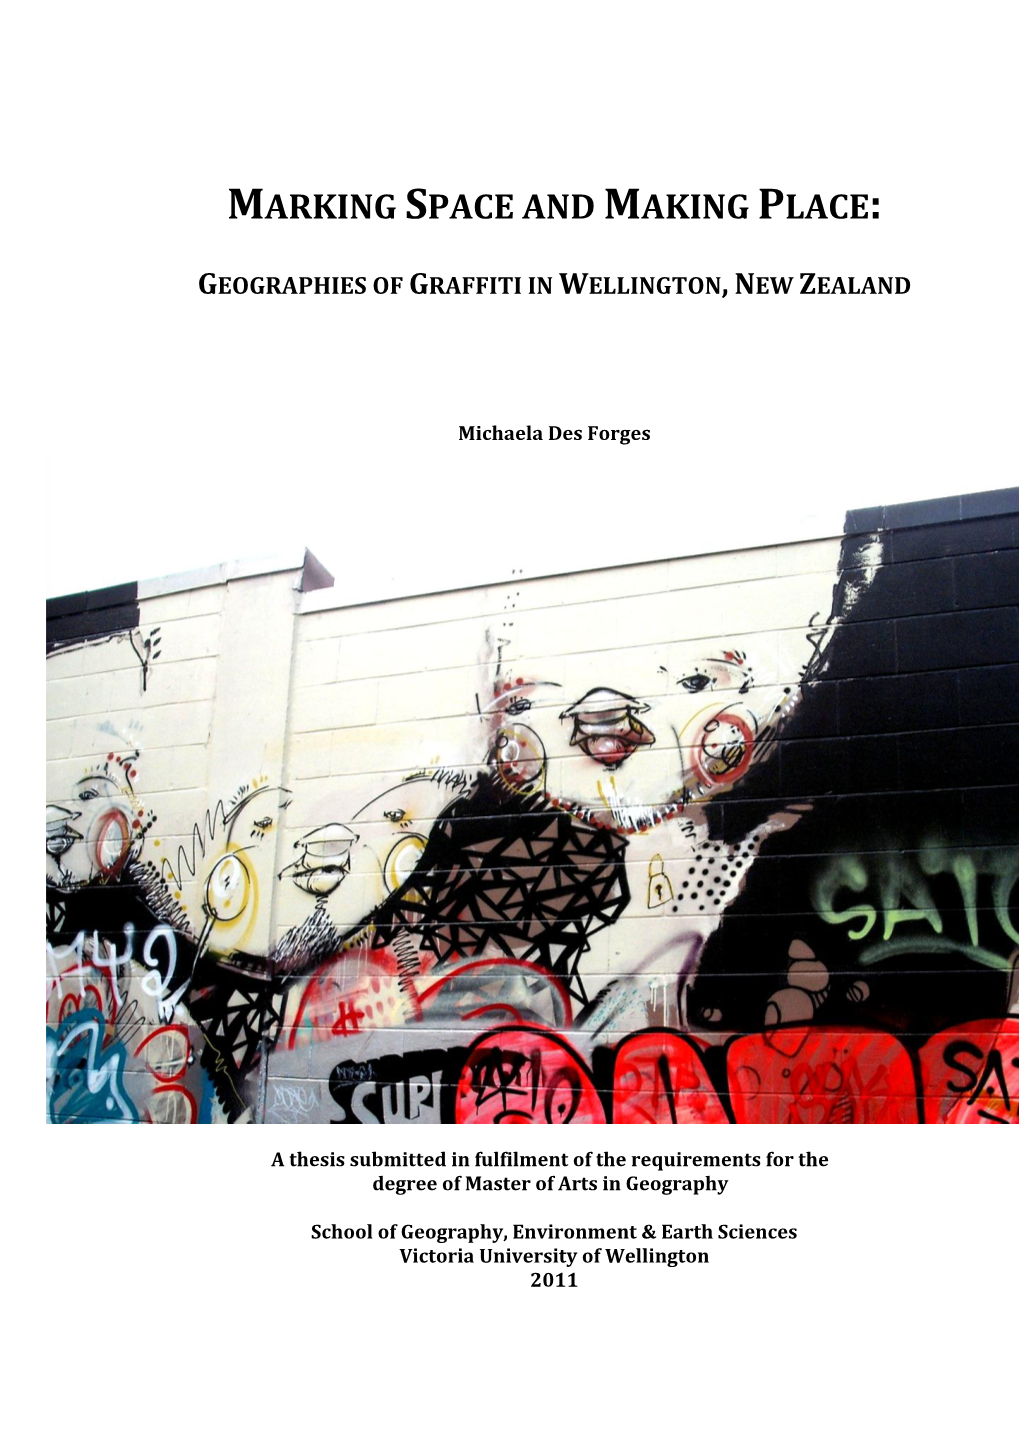 Graffiti in New Zealand and Wellington